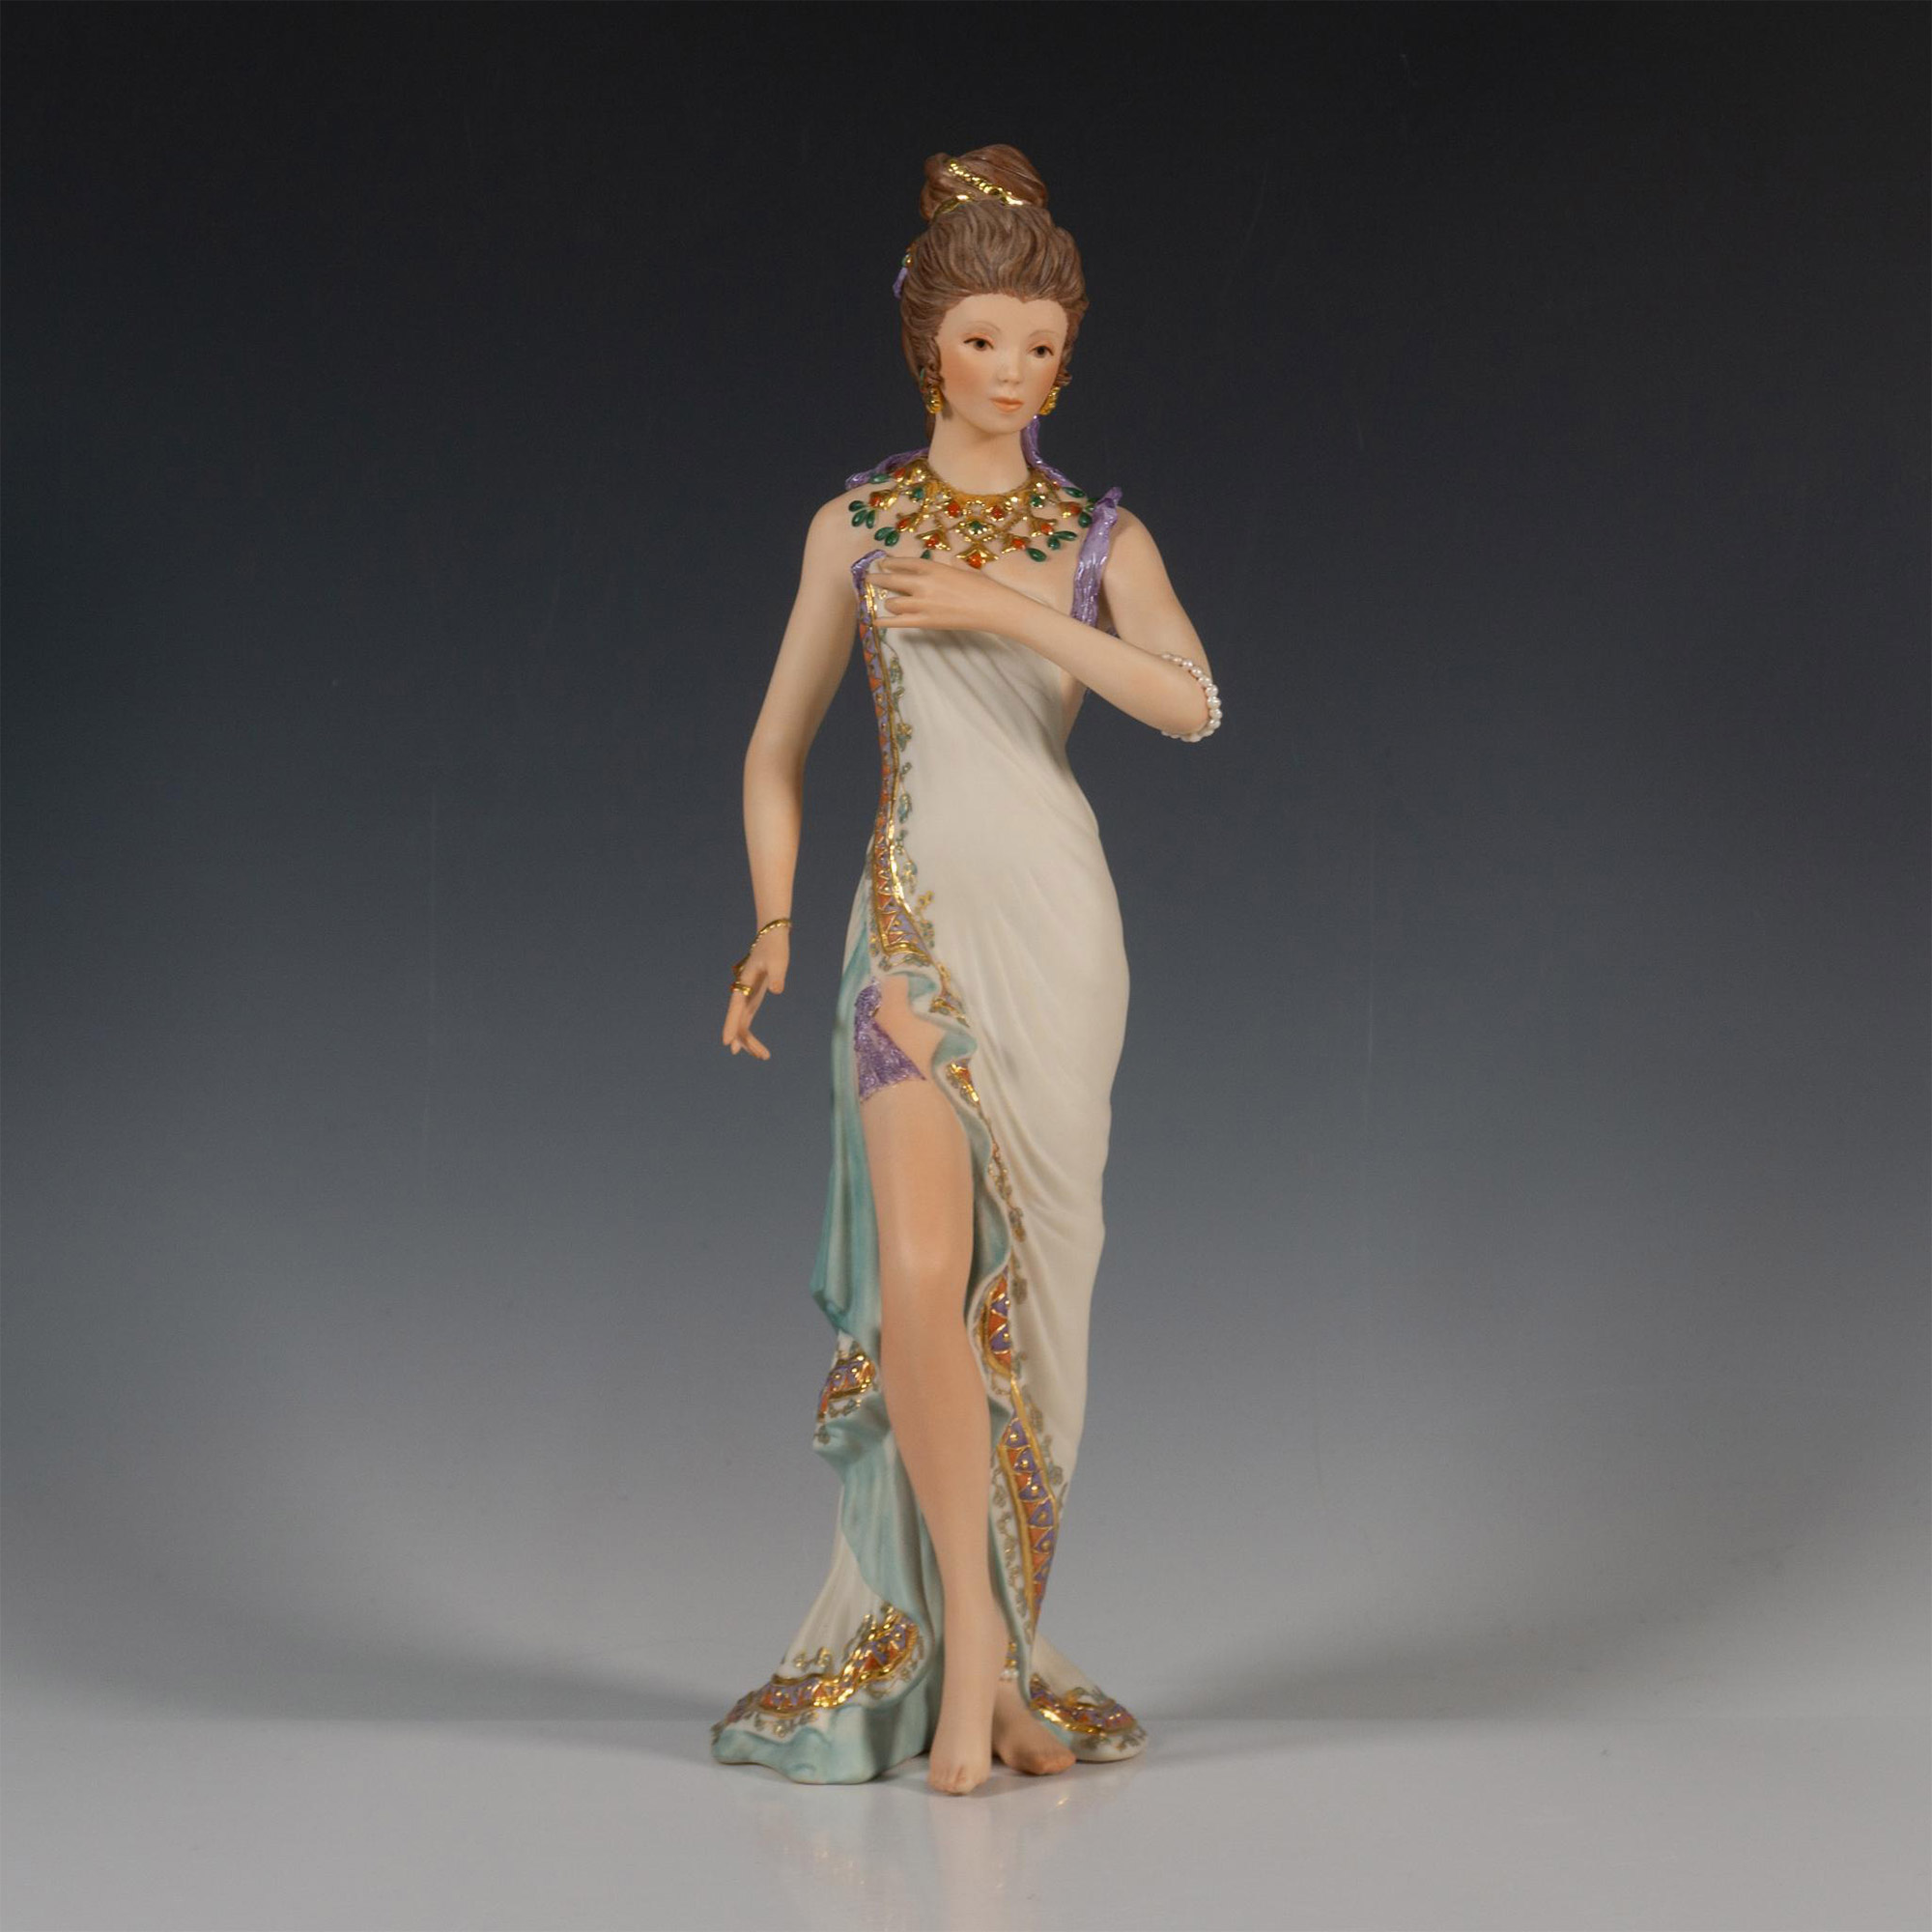 Cybis Limited Edition Figurine, Bathsheba - Image 2 of 5